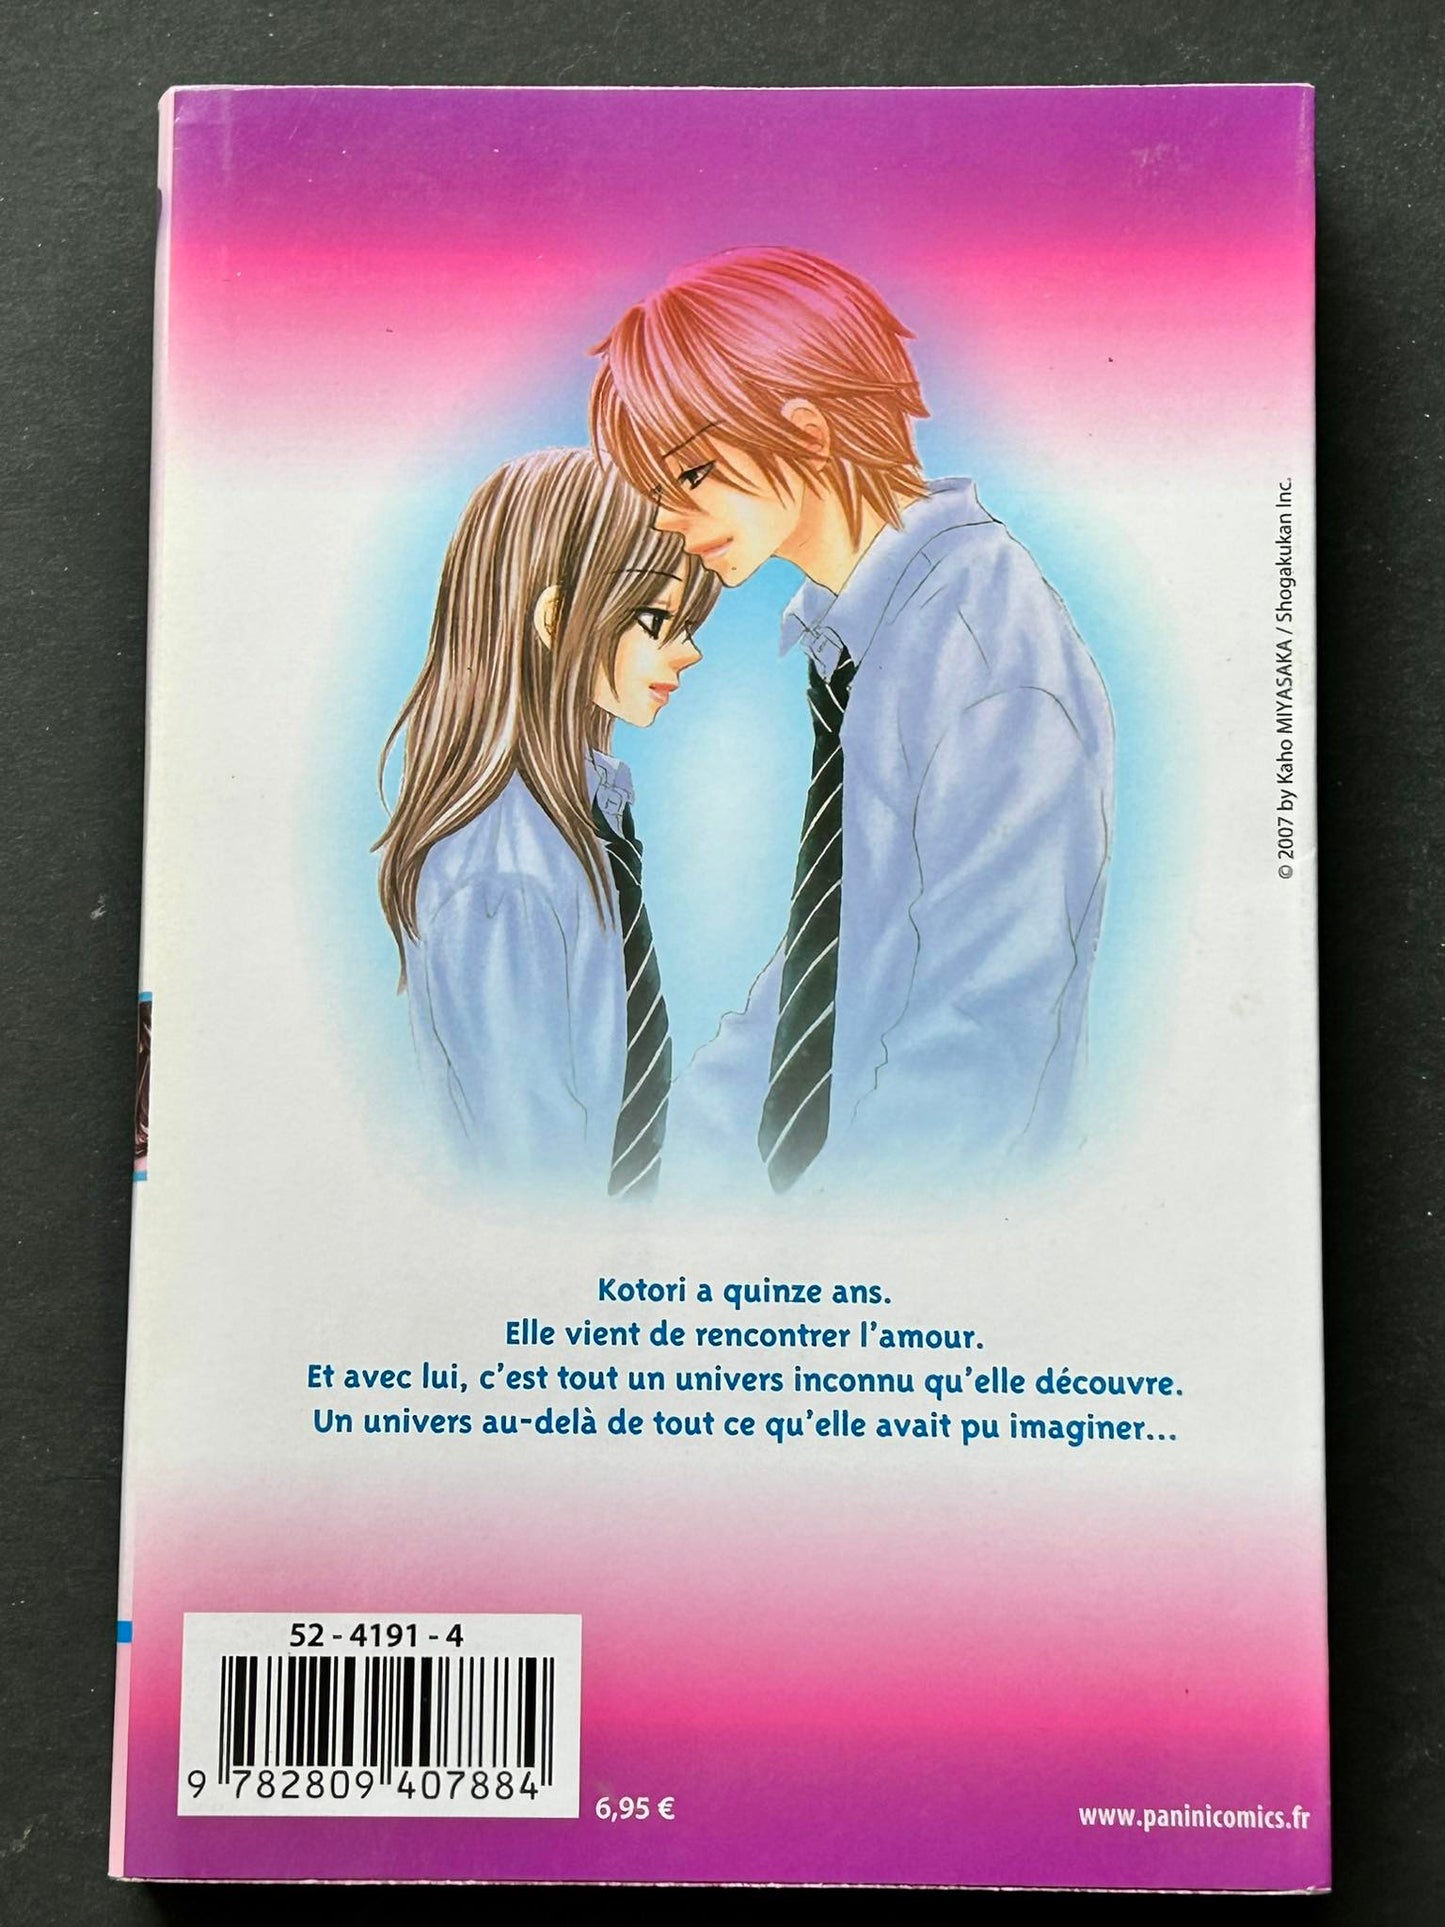 A romantic love story, volume 1